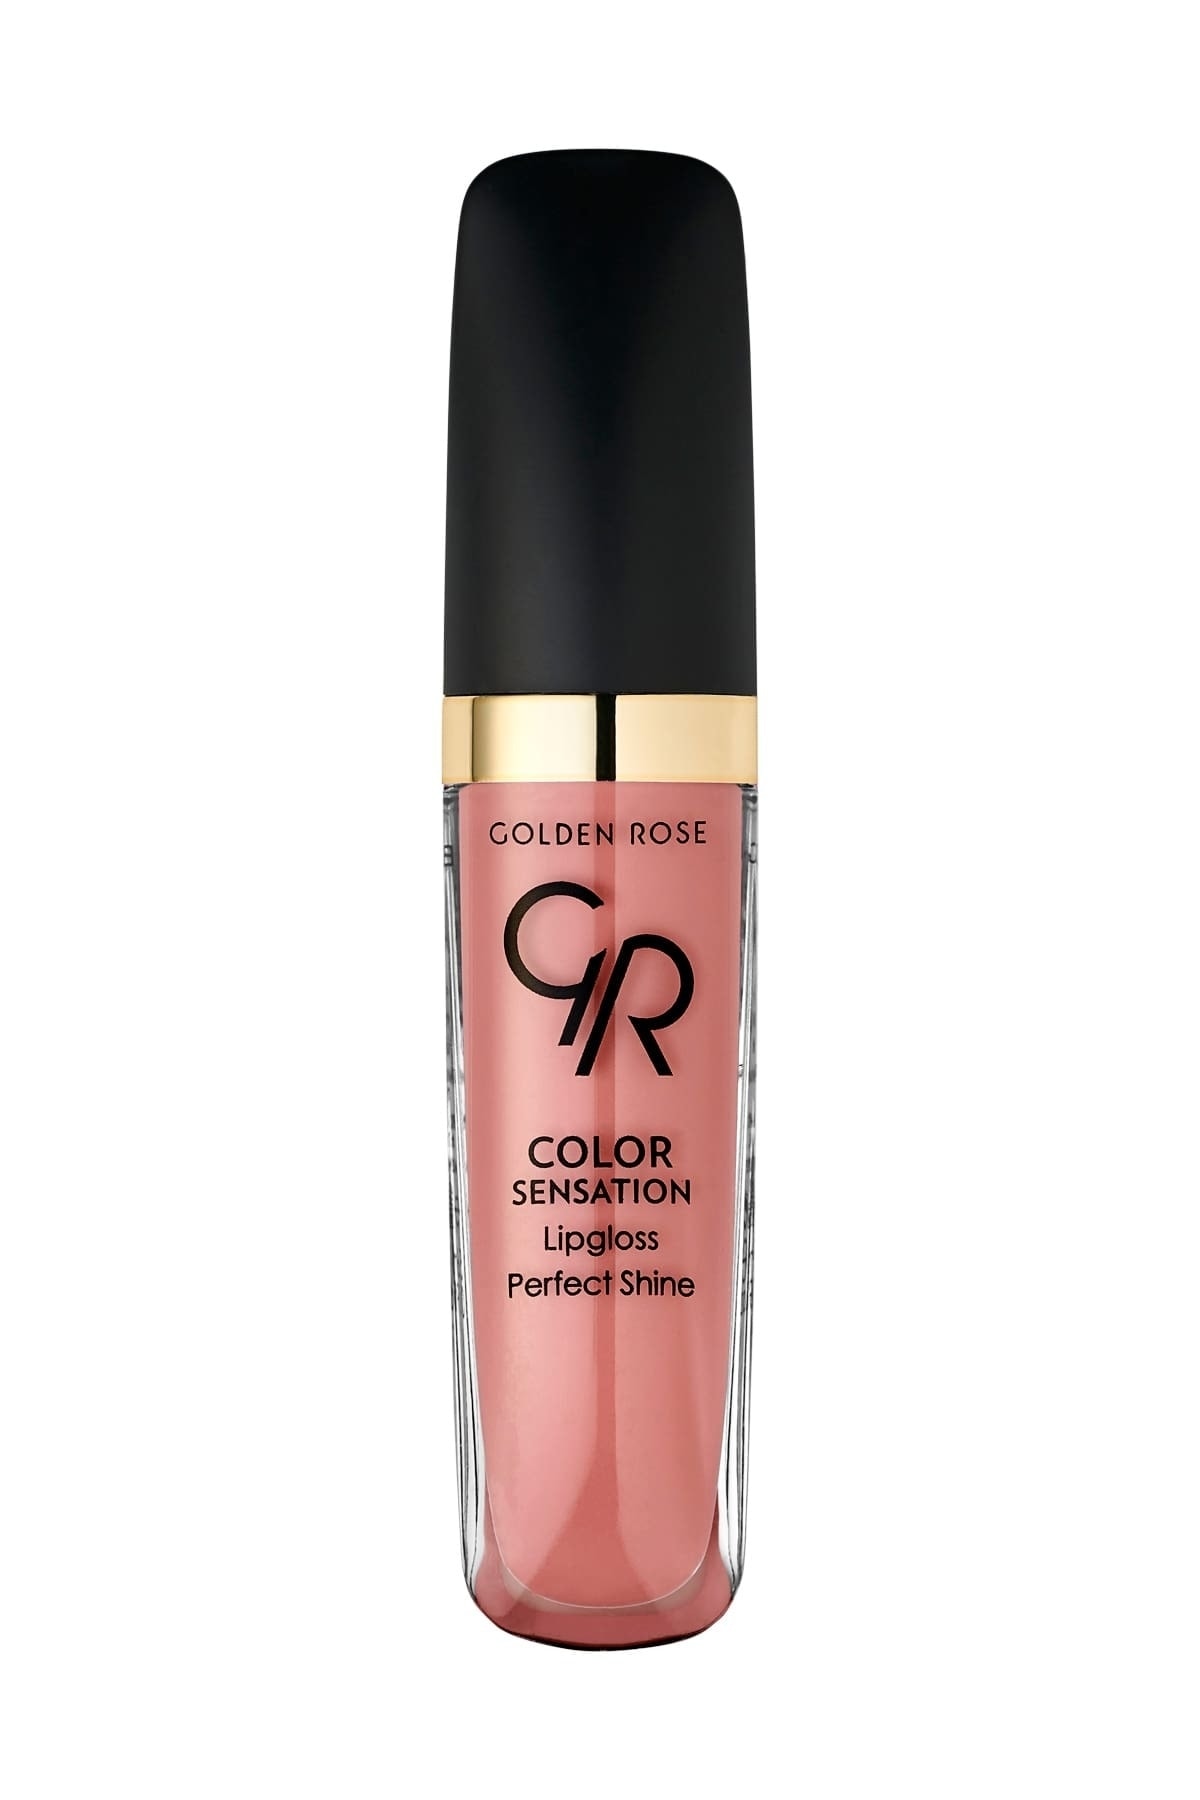 Golden Rose Dudak Parlatıcısı - Color Sensation Lipgloss No: 103 8691190704032